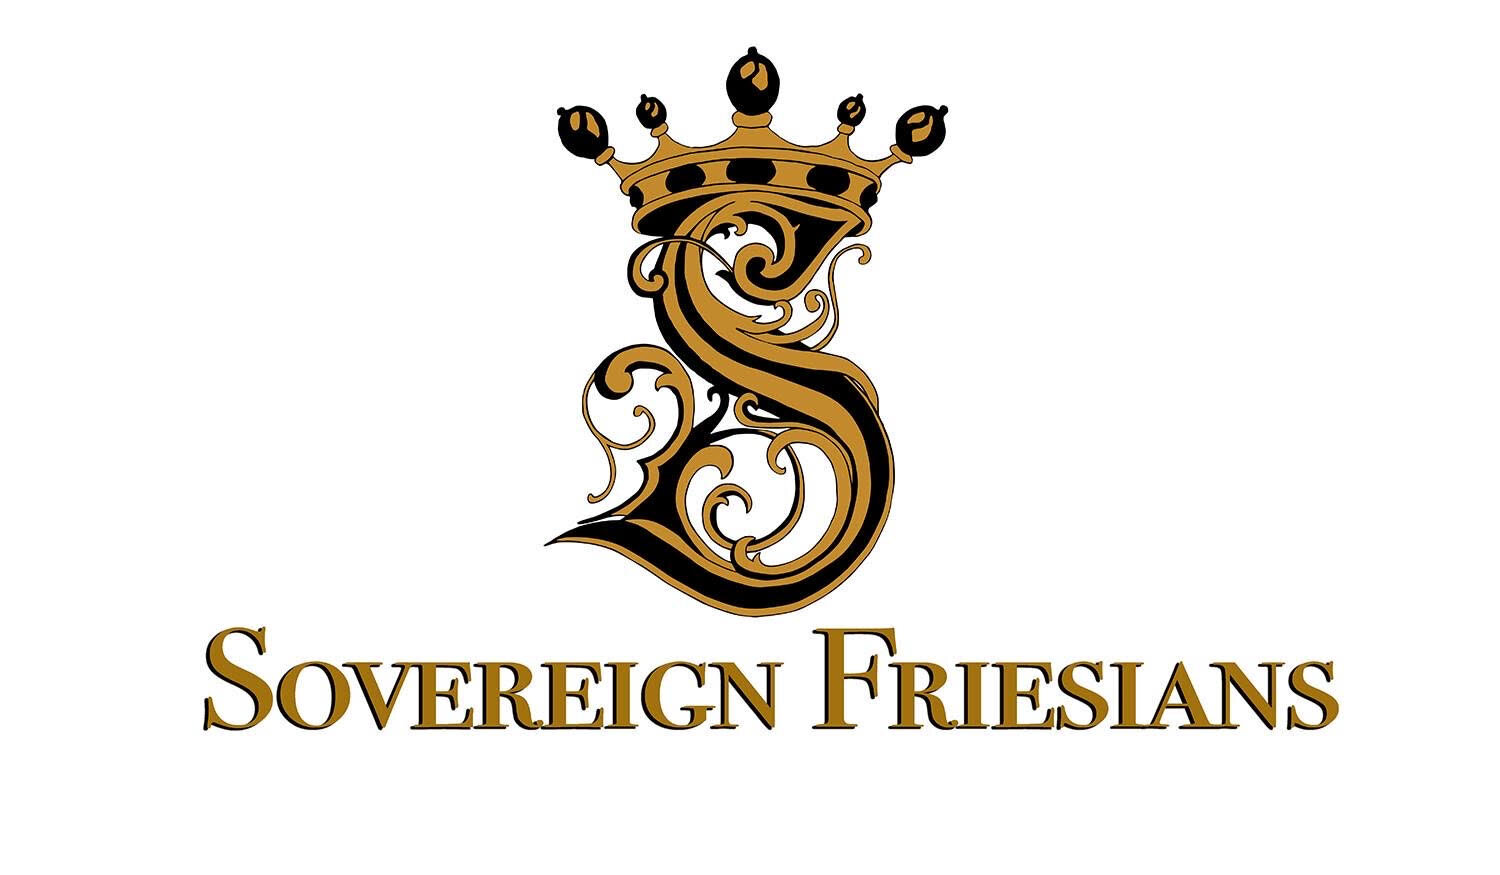 Sovereign Friesian Horses